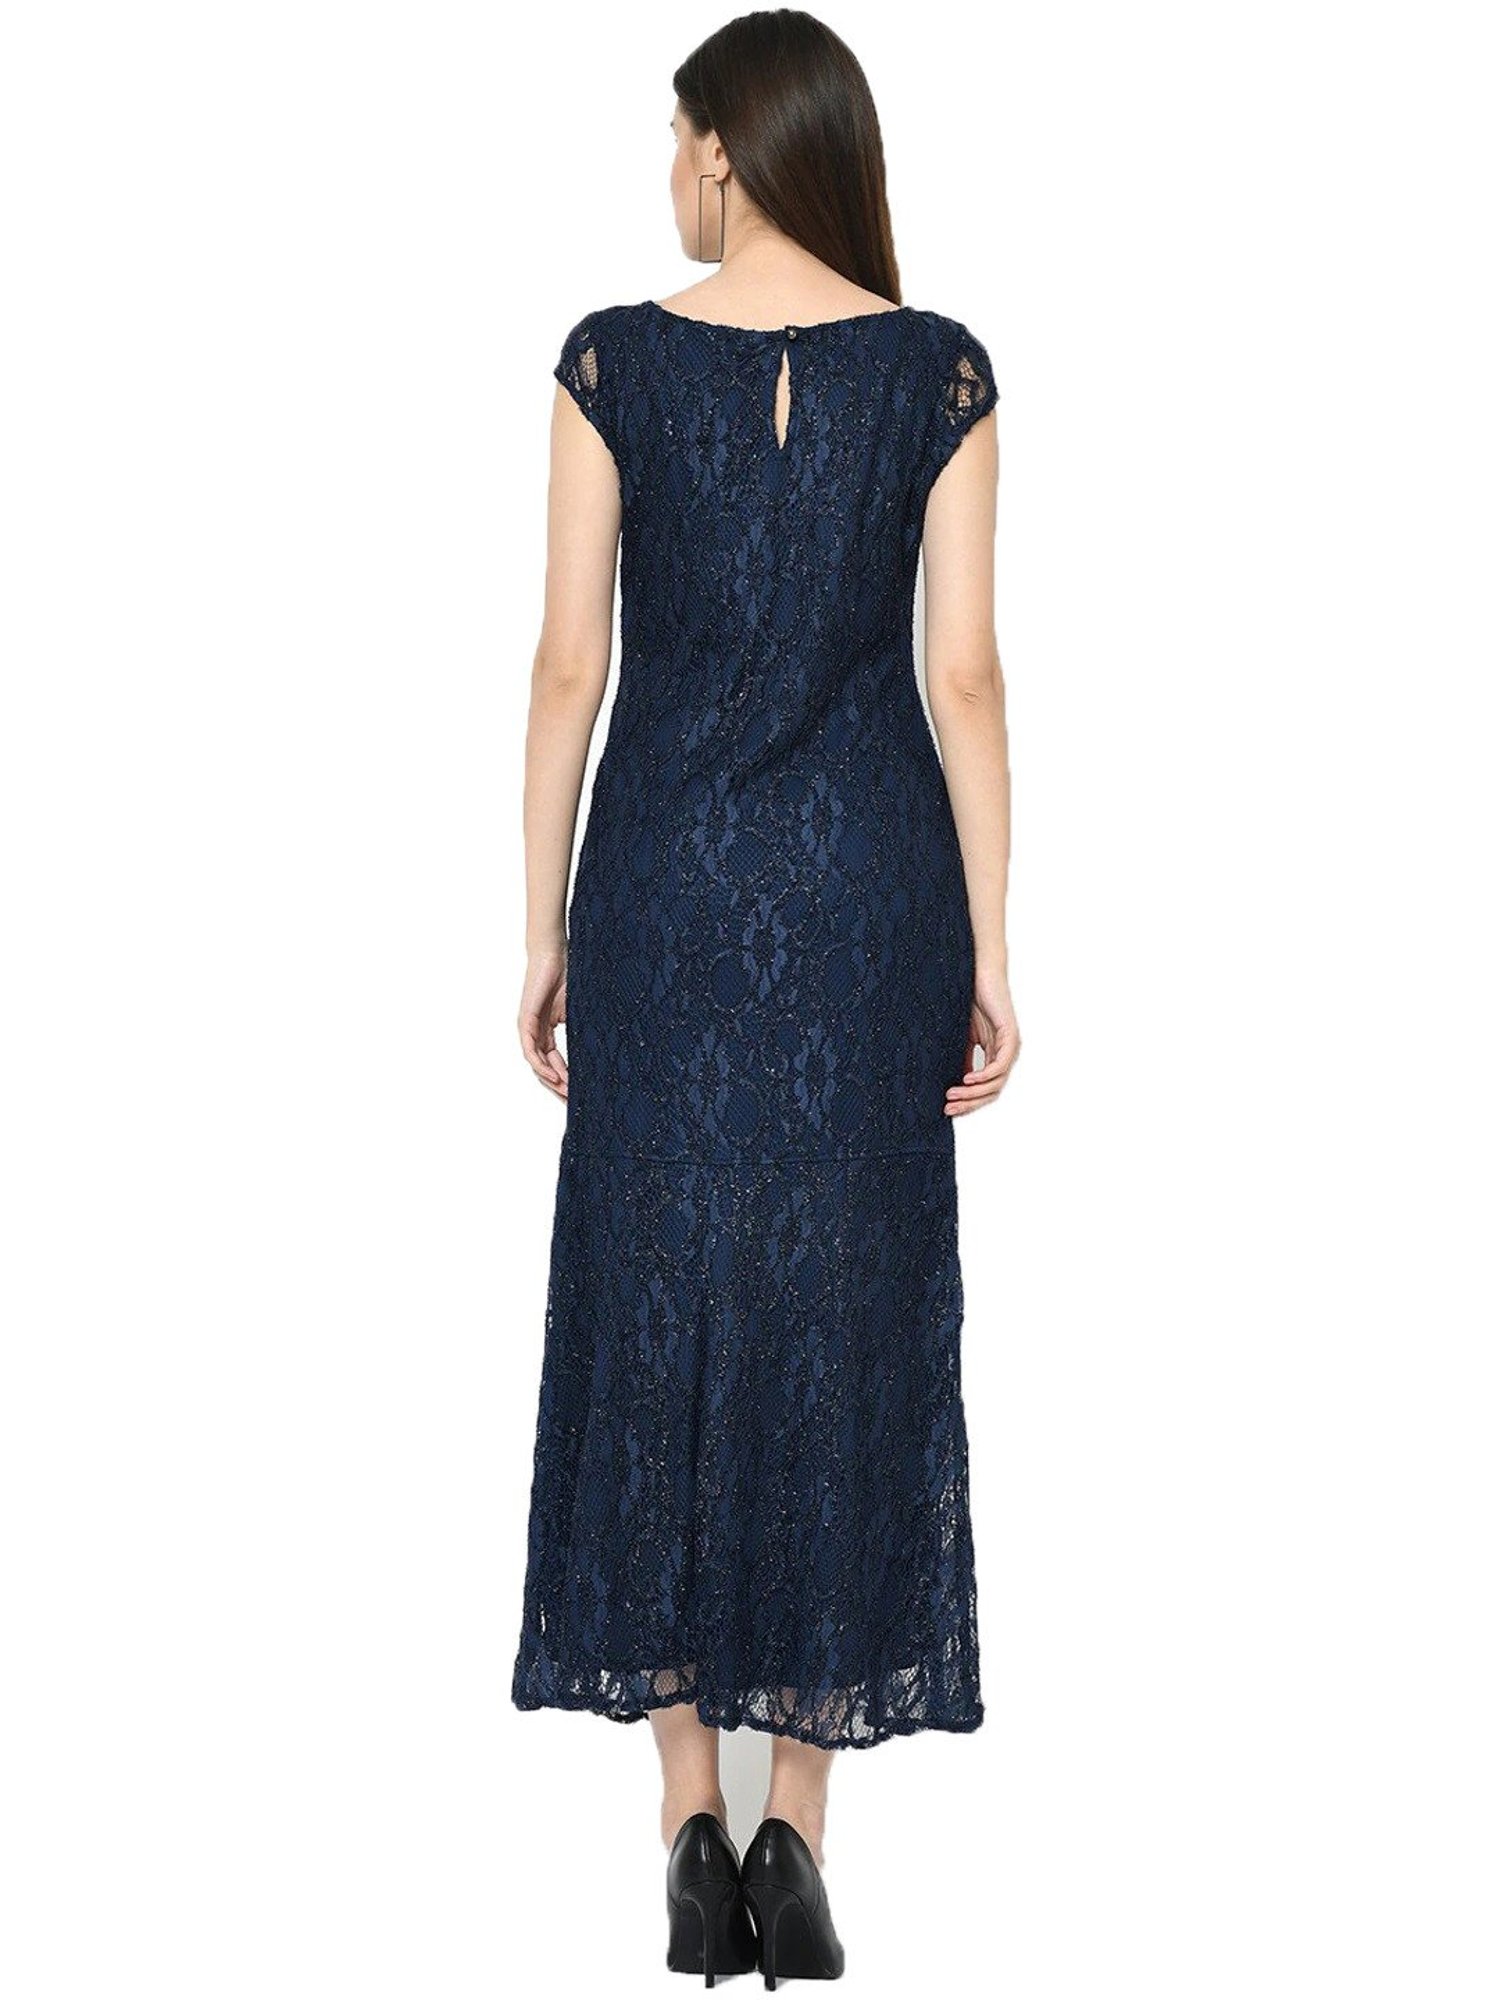 ASOS DESIGN Premium lace midi dress with ruffle detail in blue | ASOS